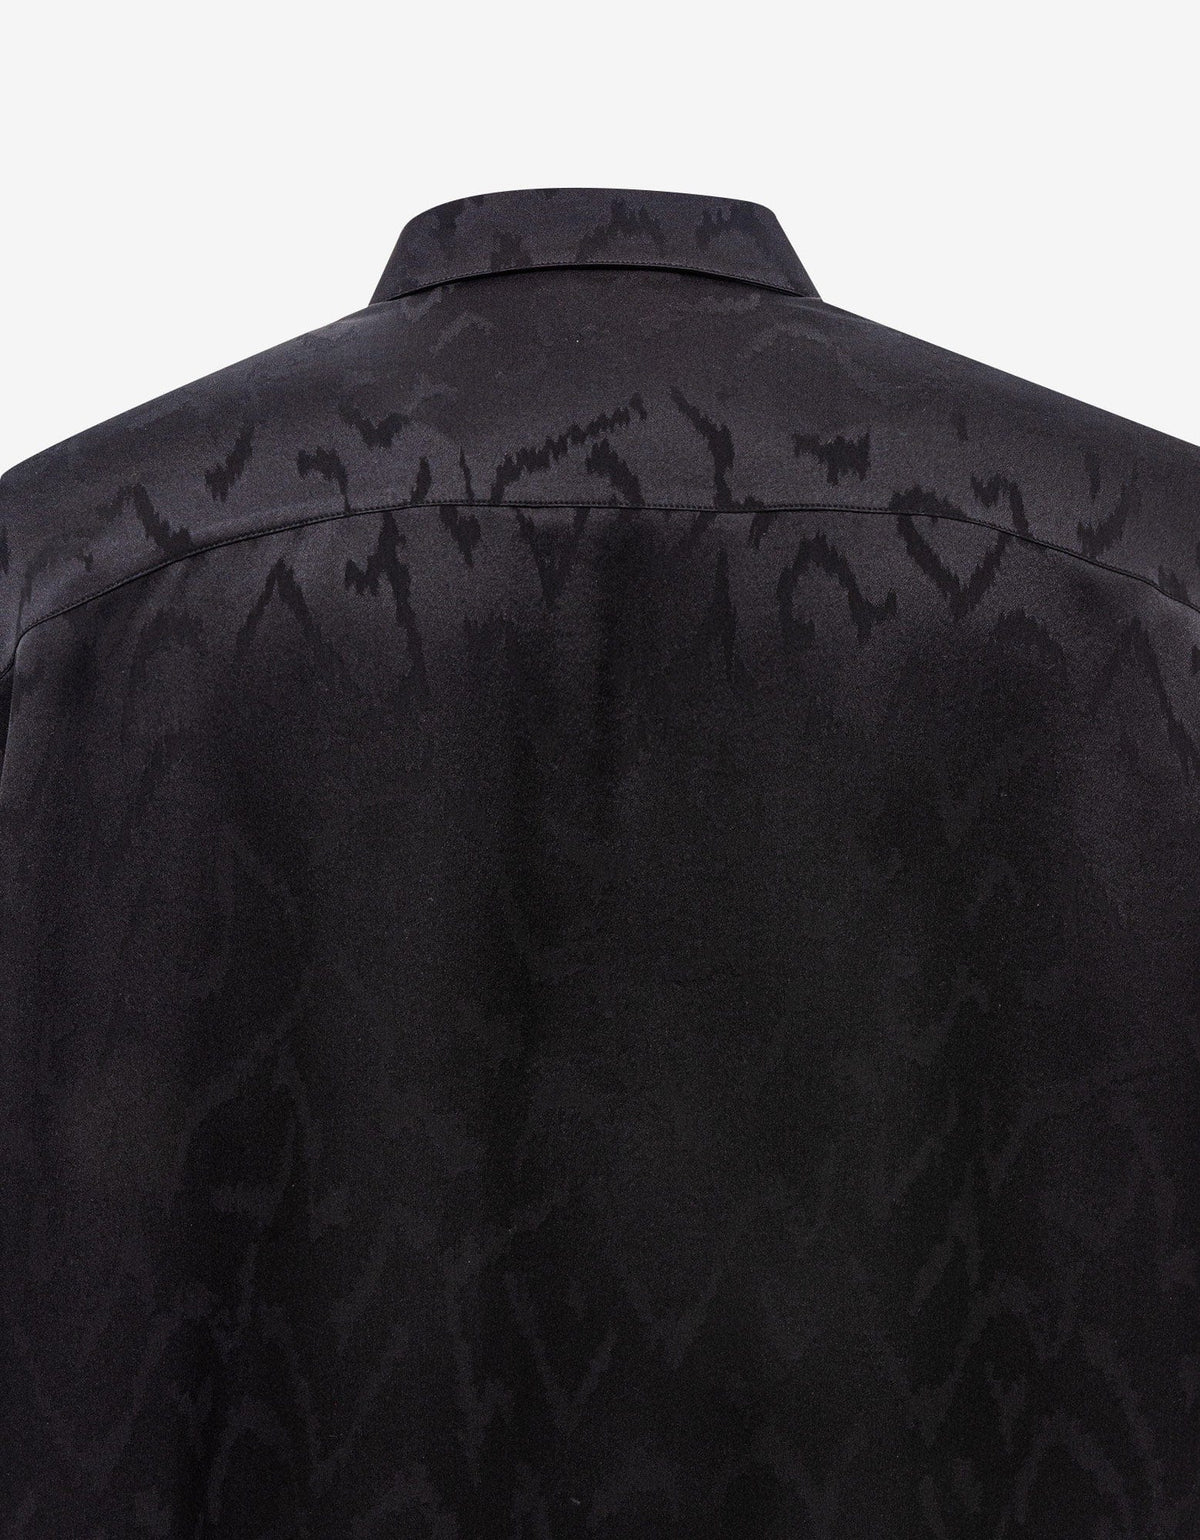 Saint Laurent Black Pattern Oversize Silk Shirt